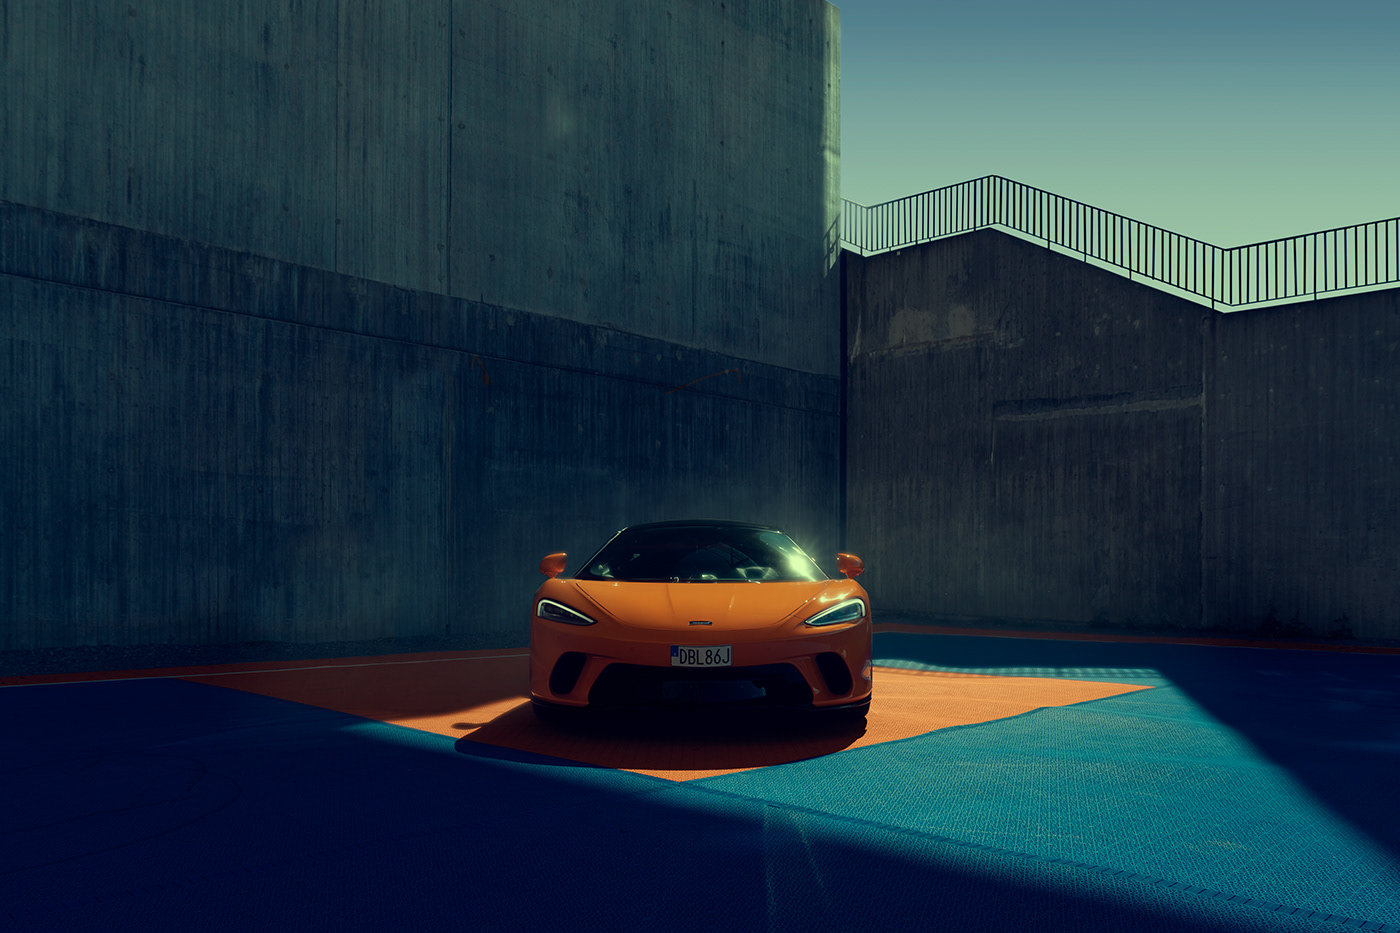 Automotive Photography colours gt McLaren orange Photography  retouching  Sweden TealAndOrange